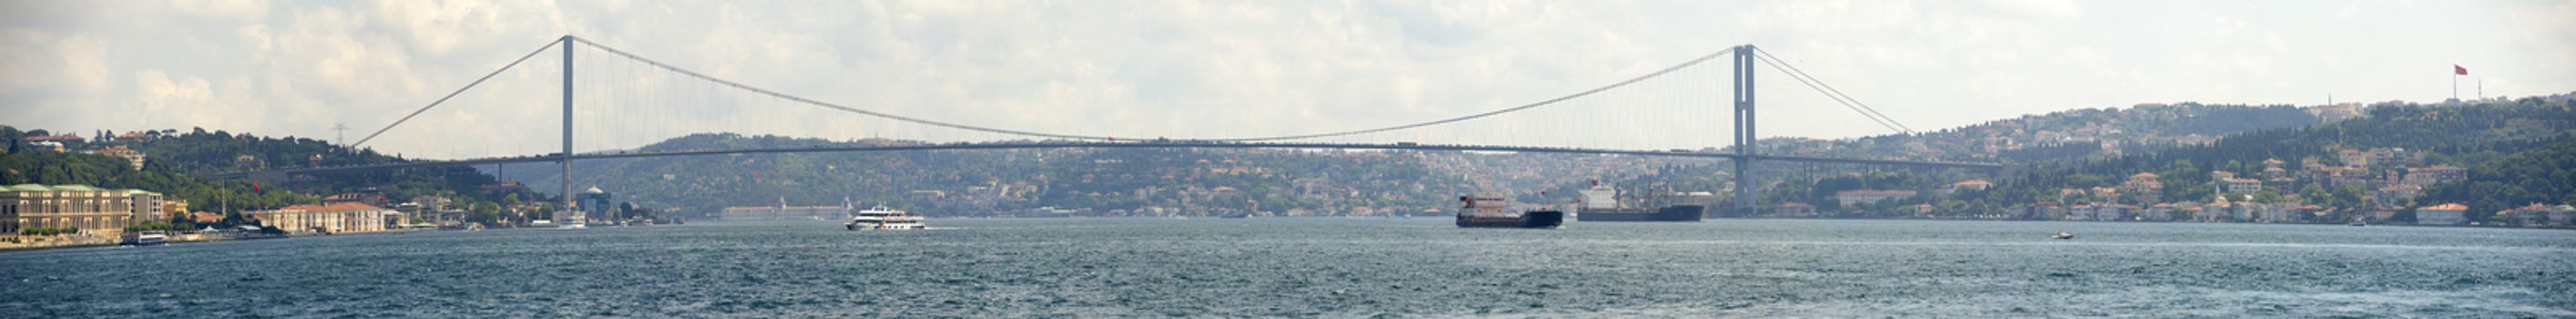 Panoramic view of Ataturk suspension bridge spanning the Bosphorus river in Istanbul, Turkey against a blue sky